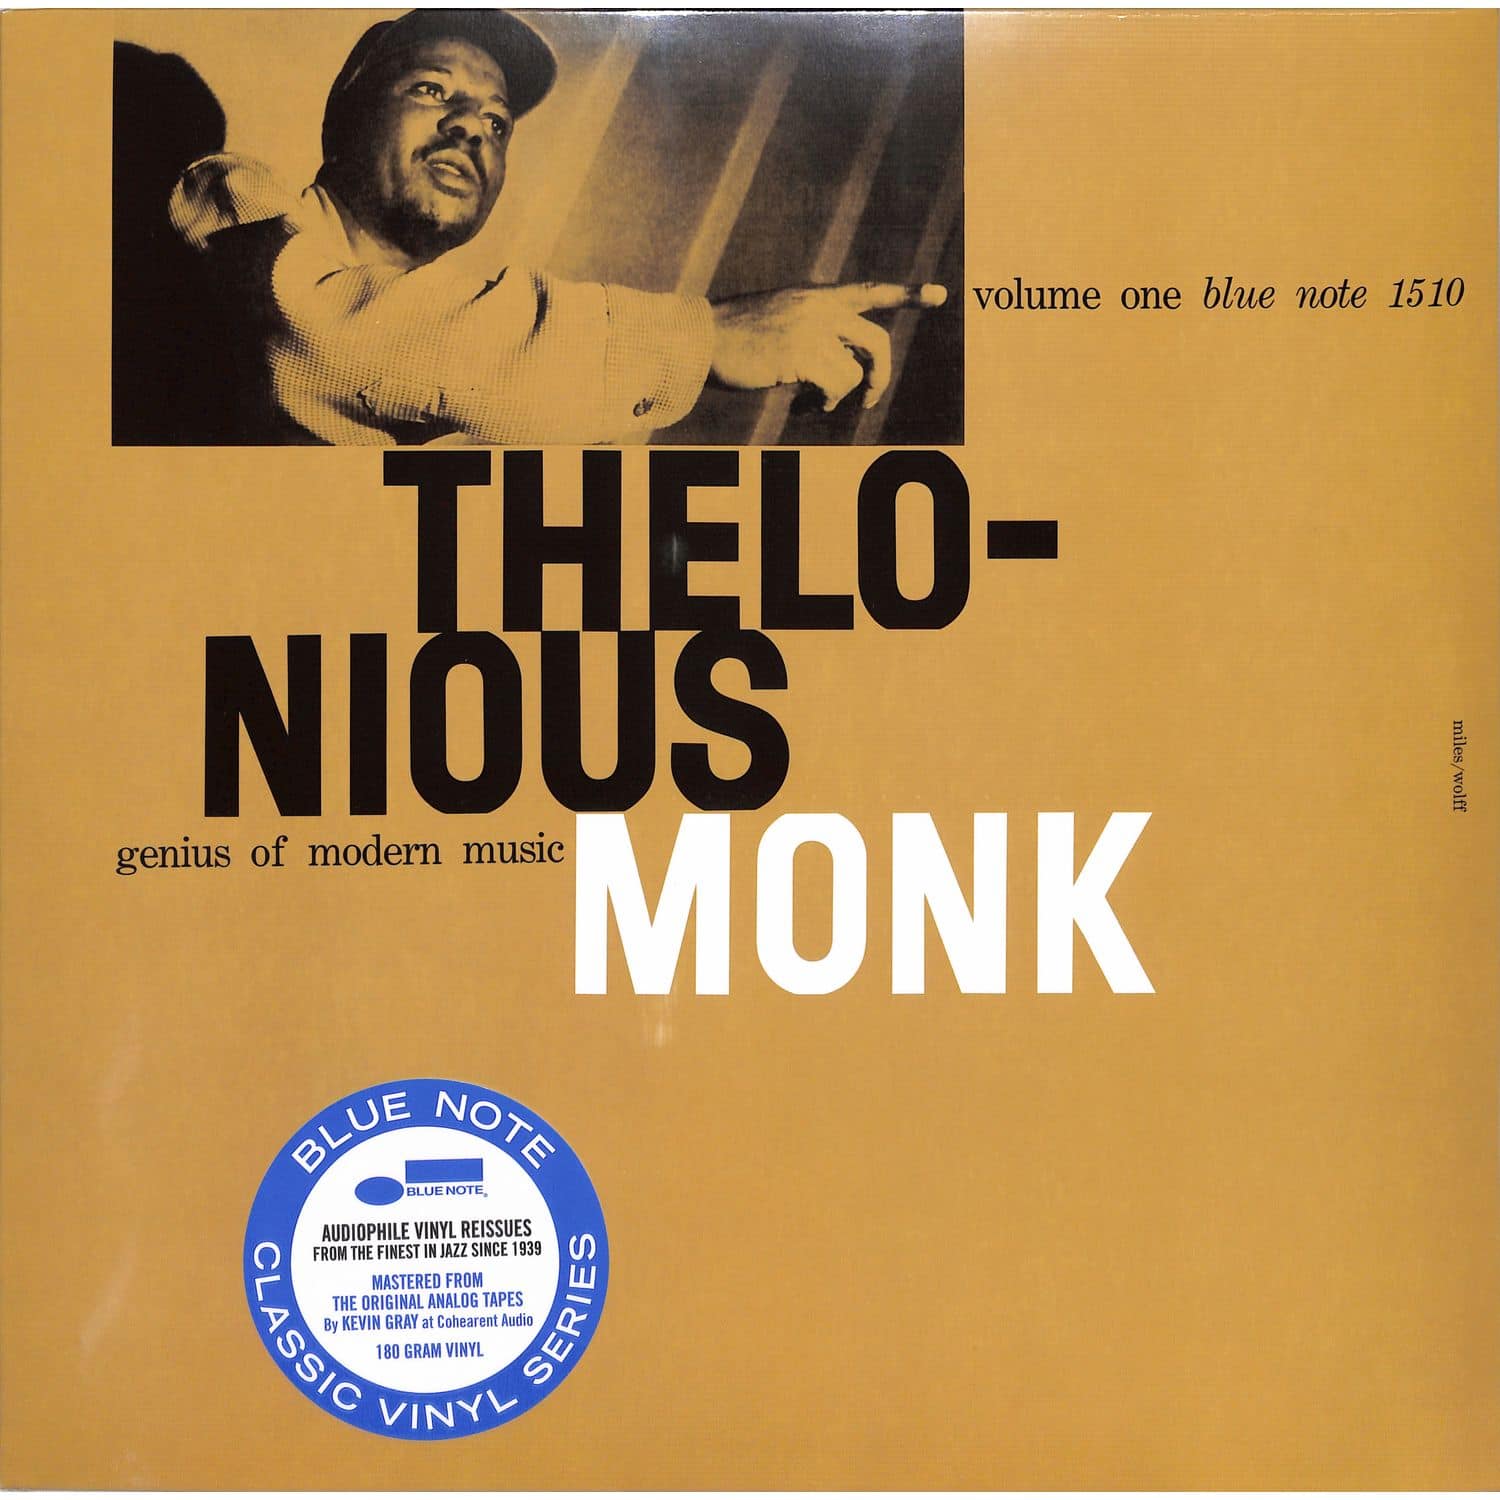  Thelonius Monk - GENIUS OF MODERN MUSIC 